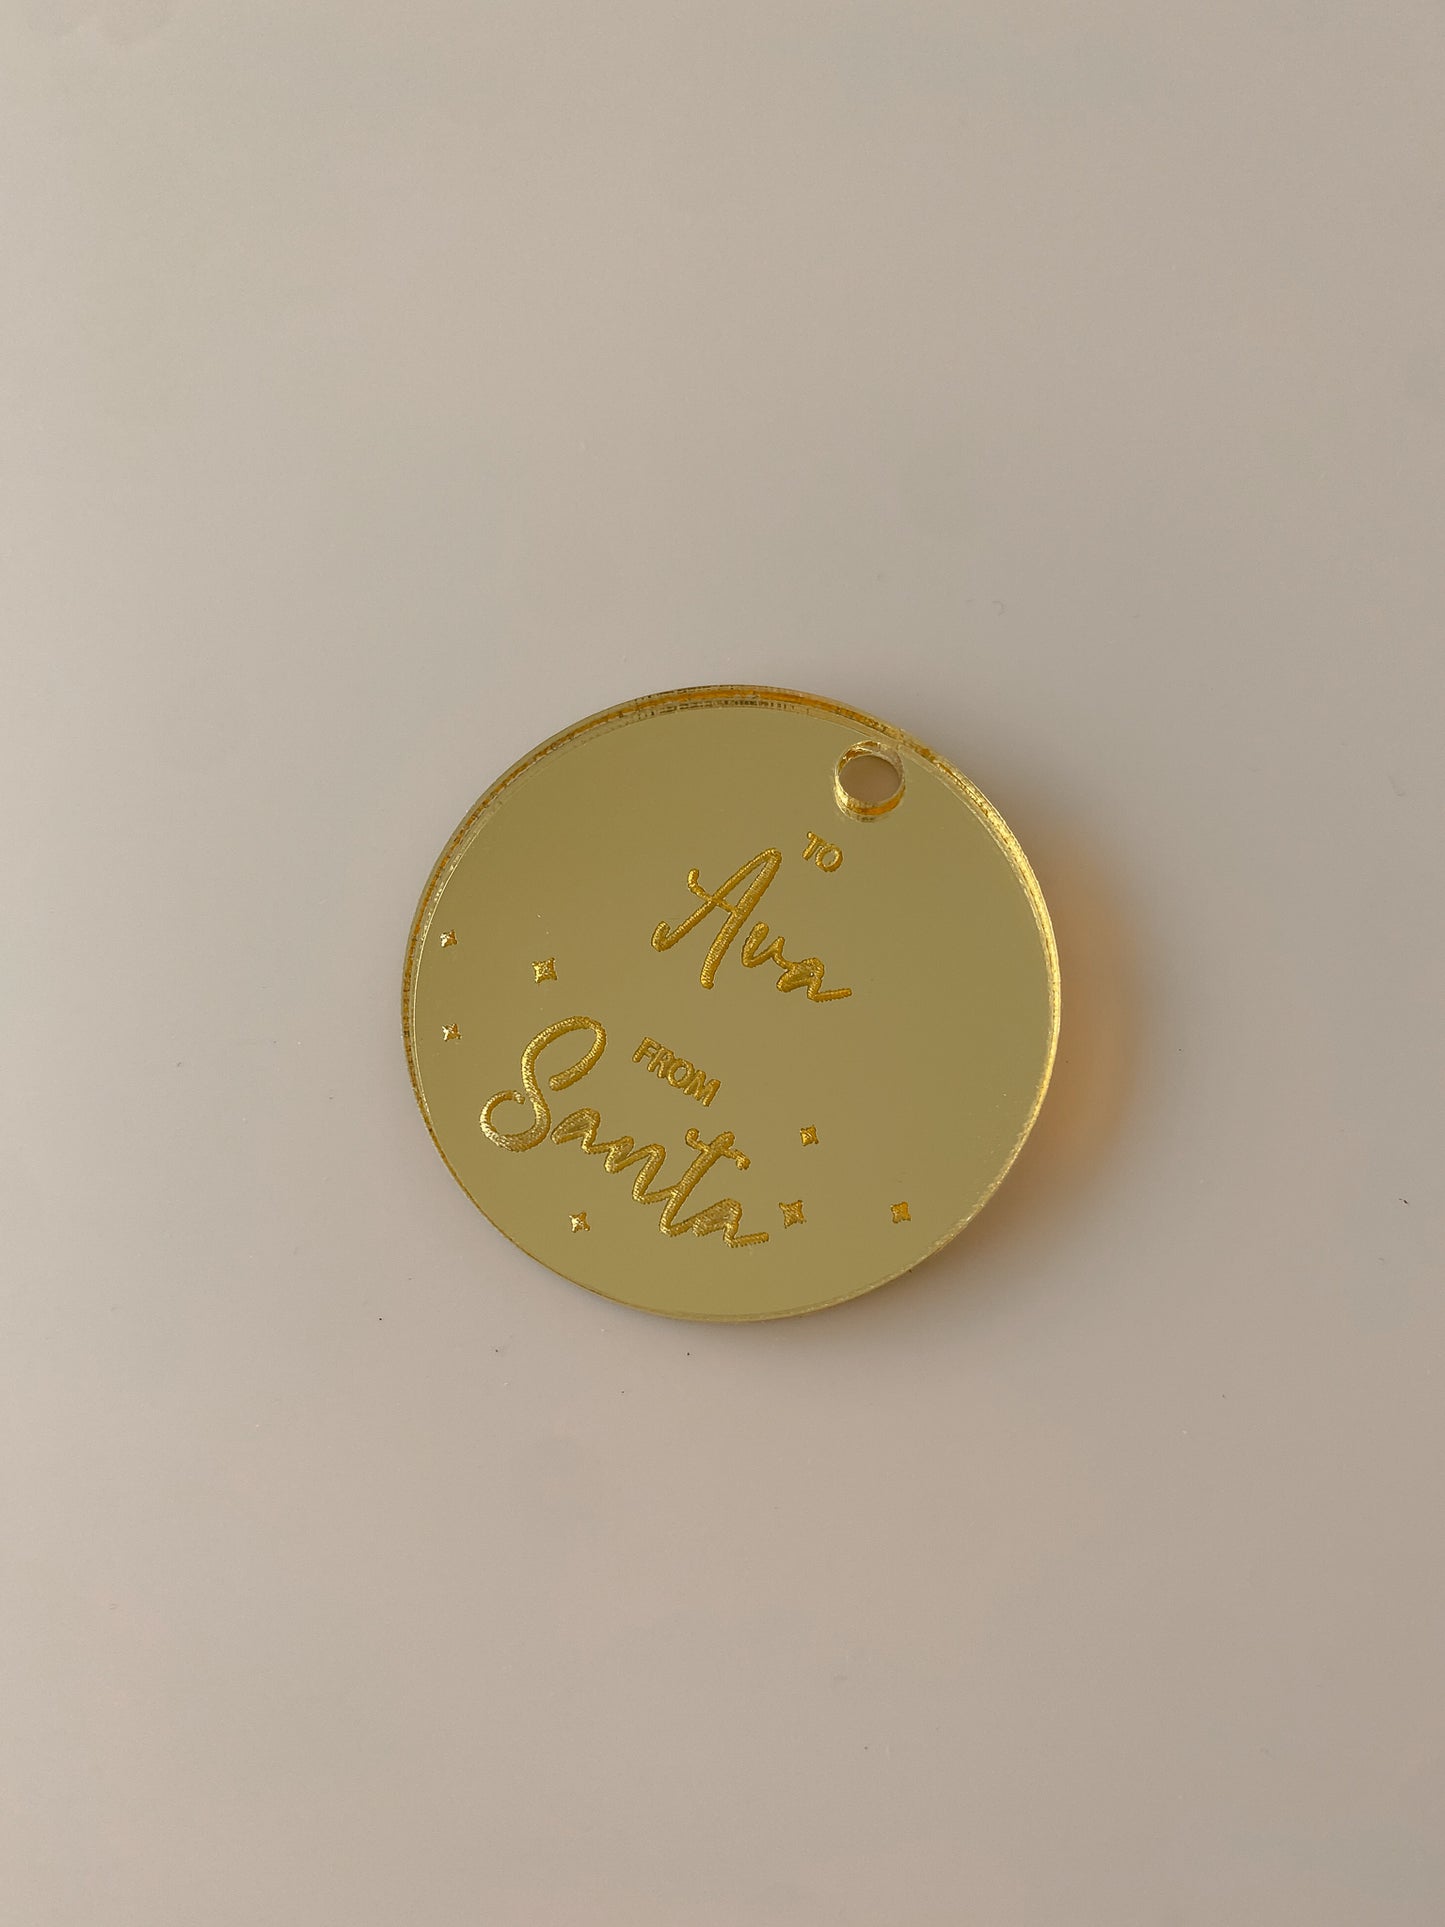 Christmas Present tags - From Santa